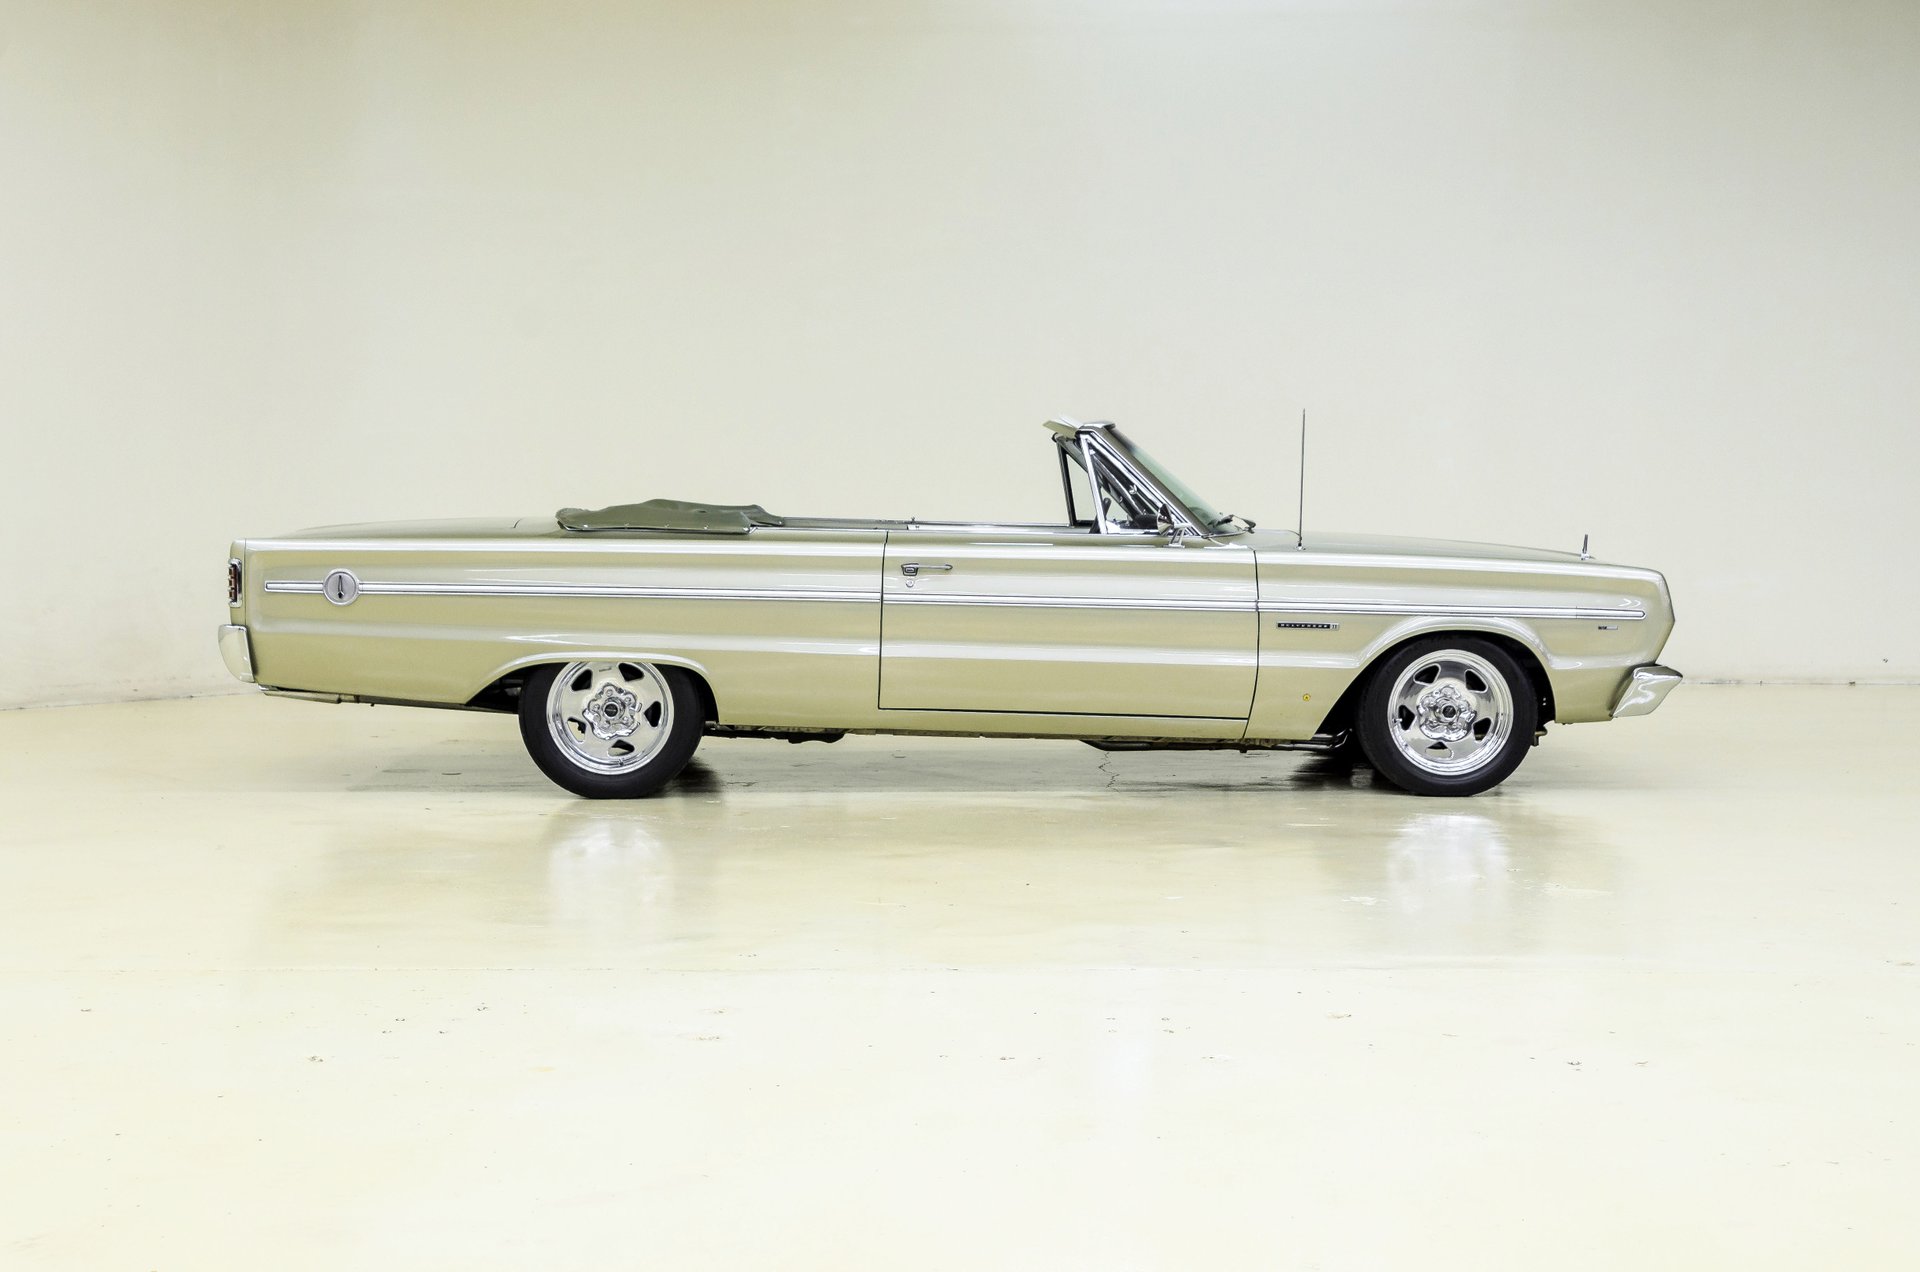 Lot 226B – 1966 Plymouth Belvedere II Convertible